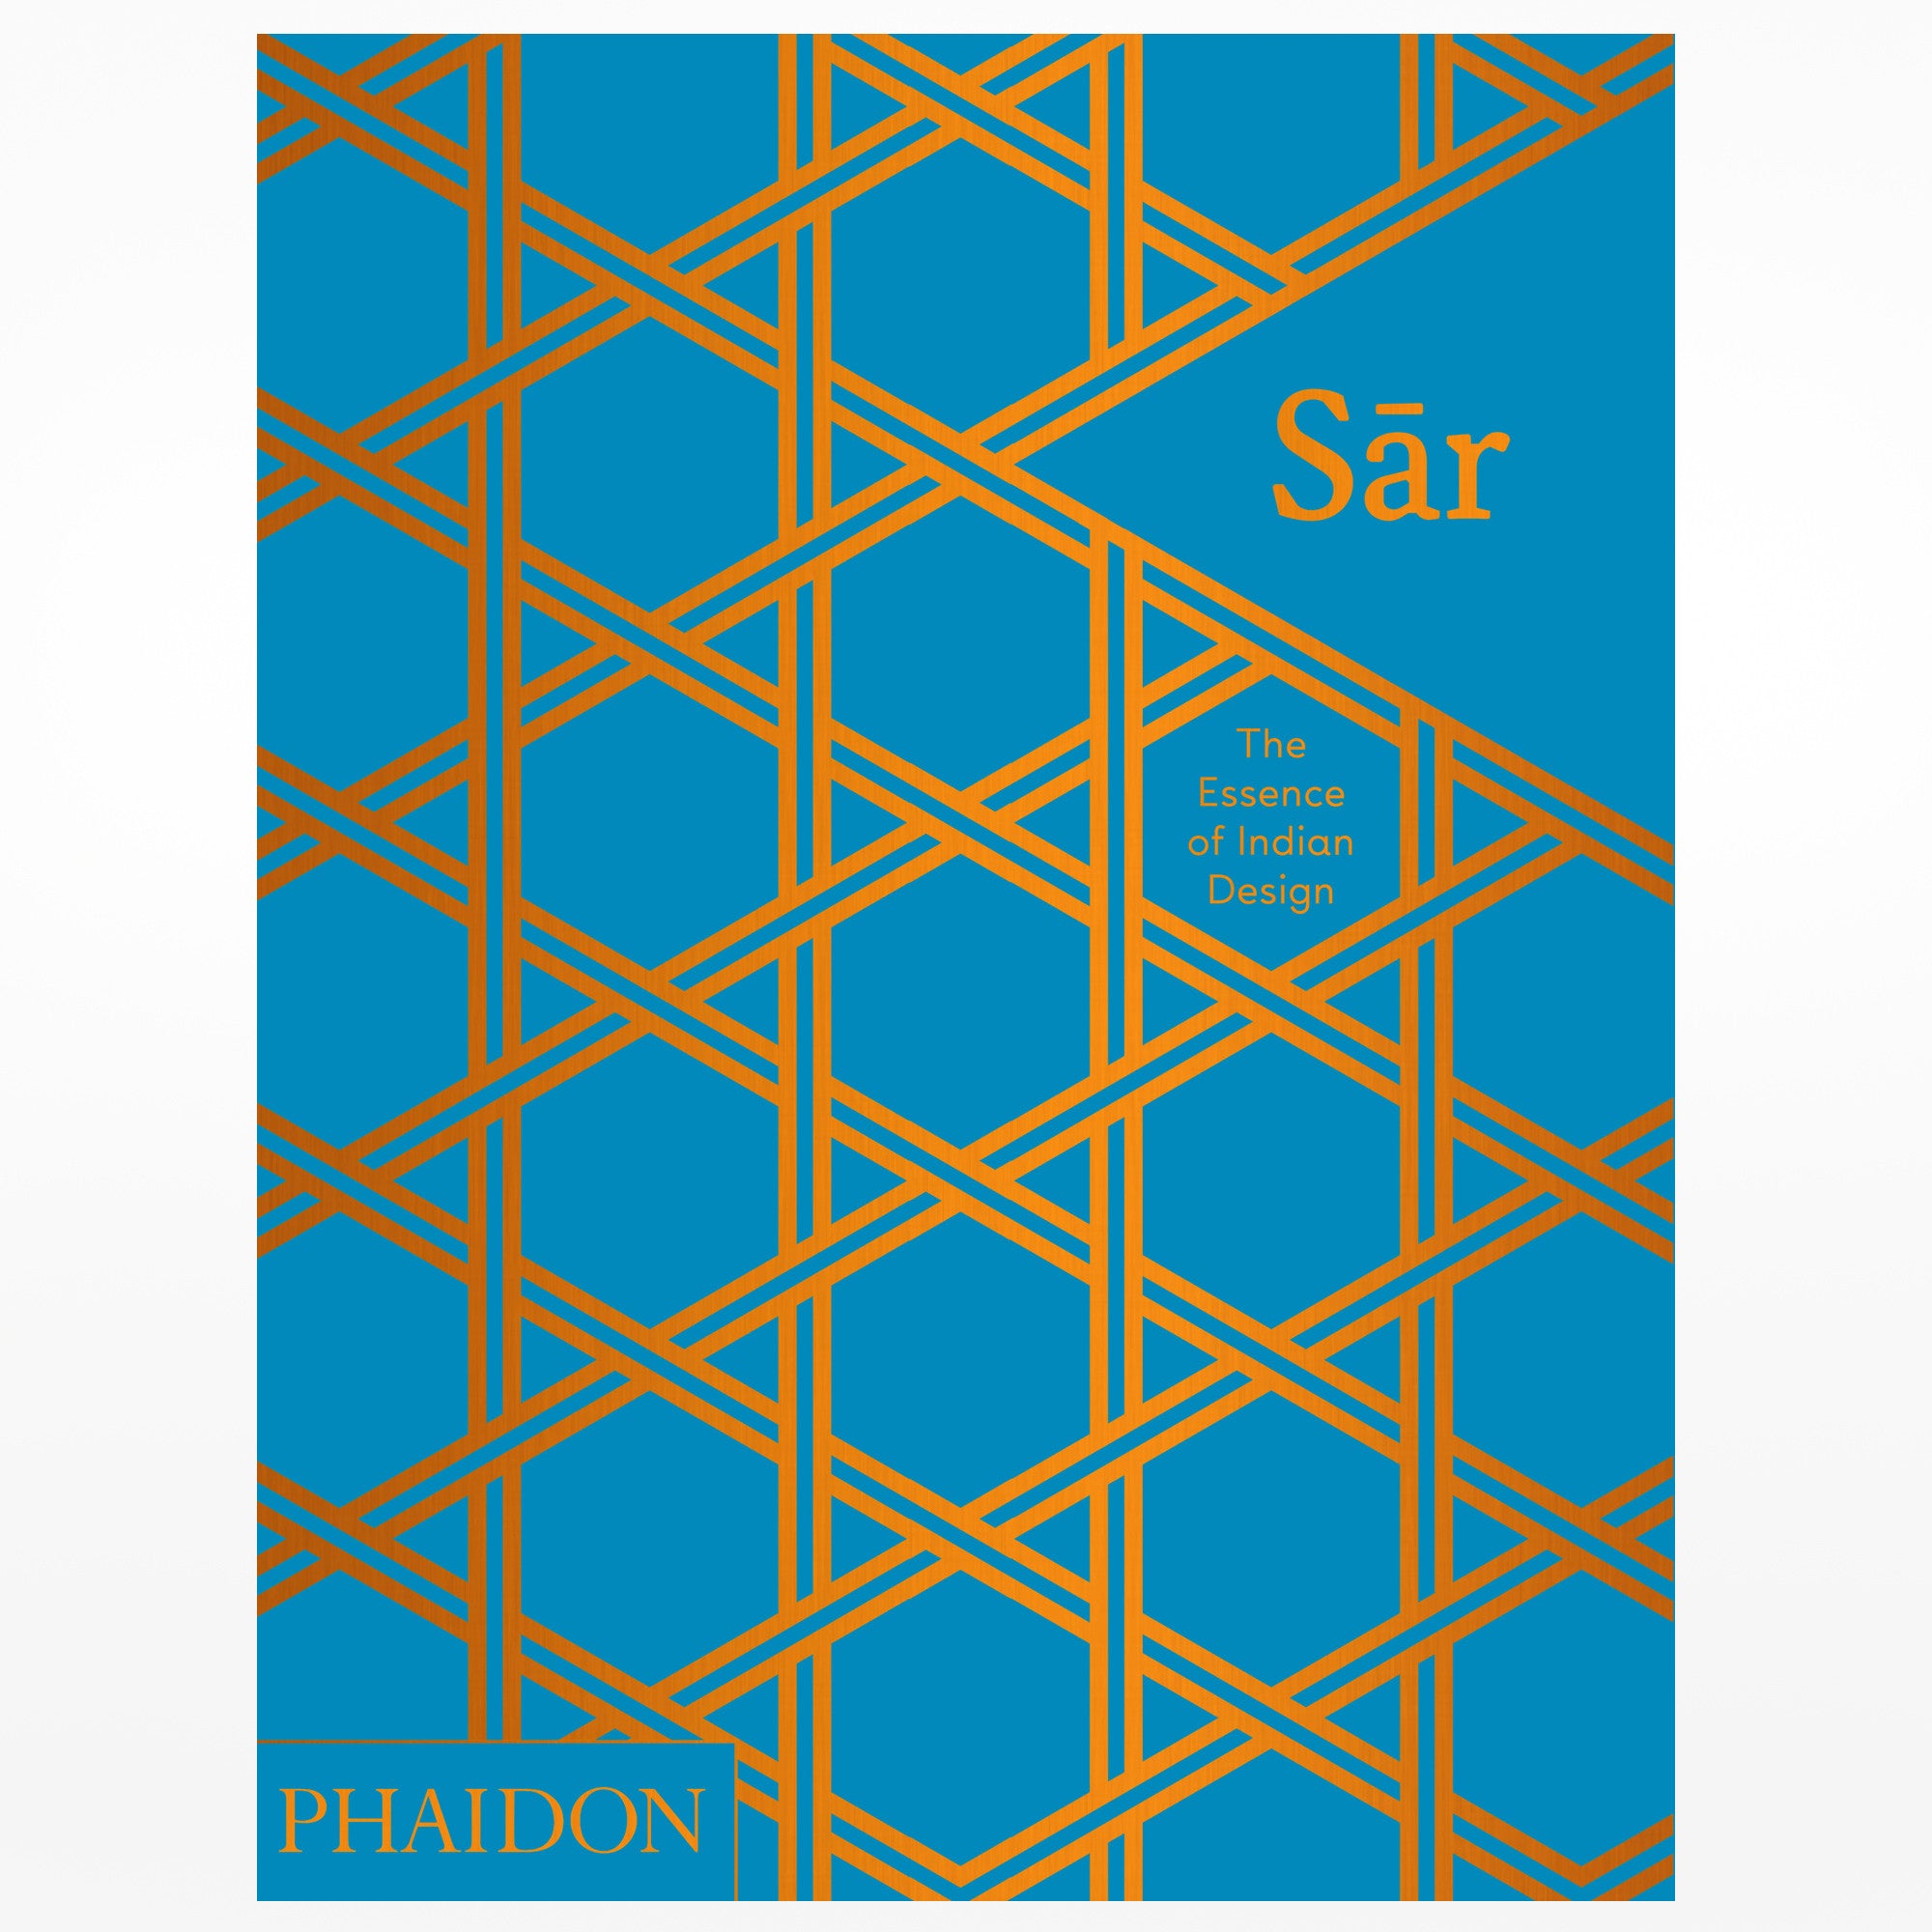 Sar: The Essence of Indian Design